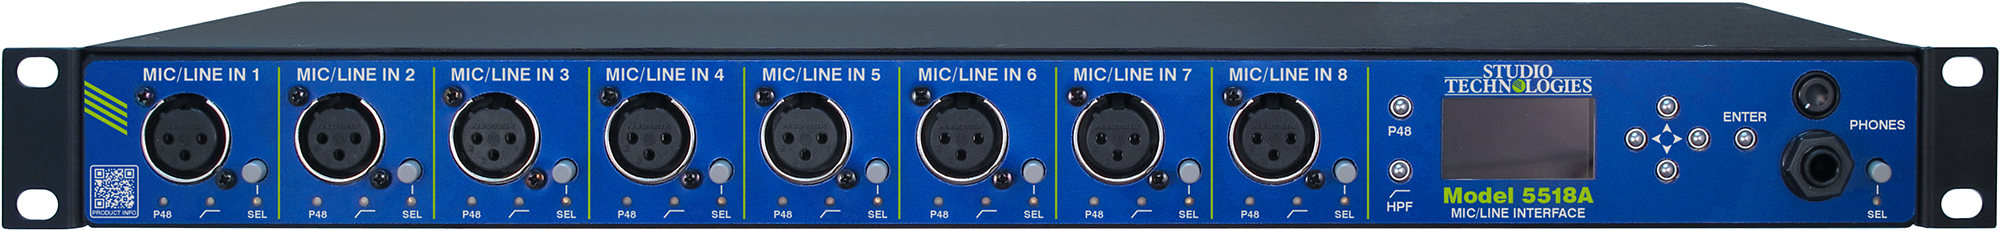 Model 5518A Mic/Line Interface